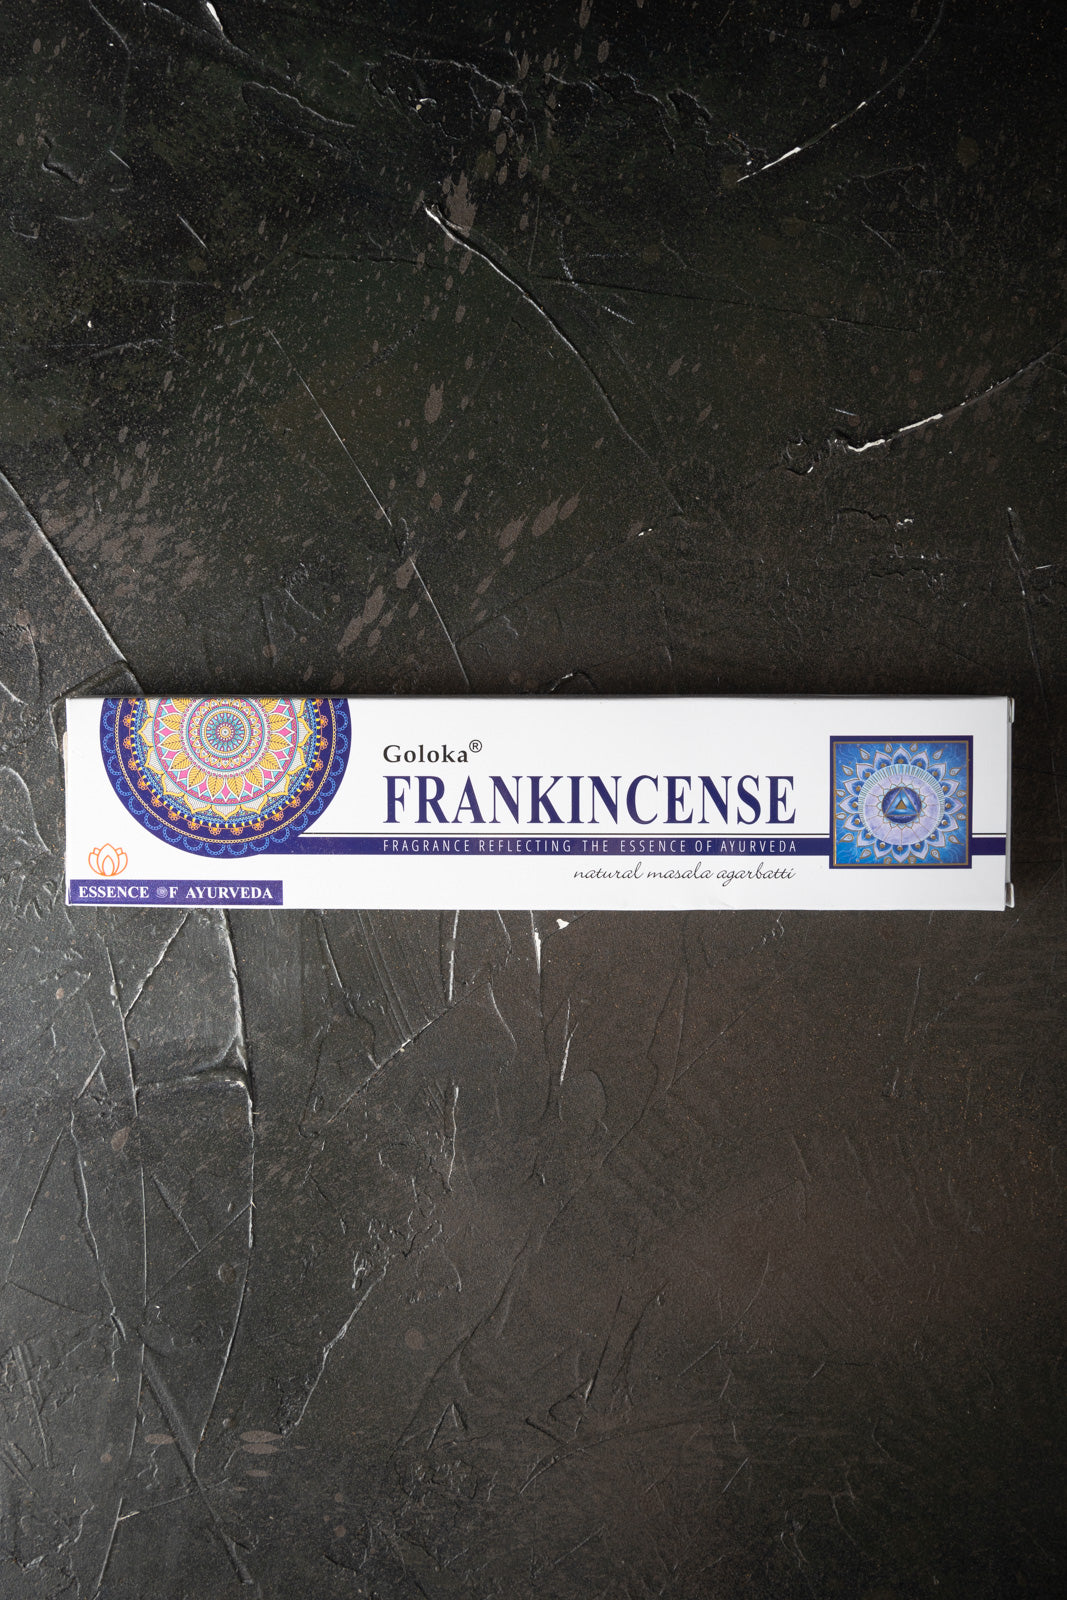 Goloka Frankincense